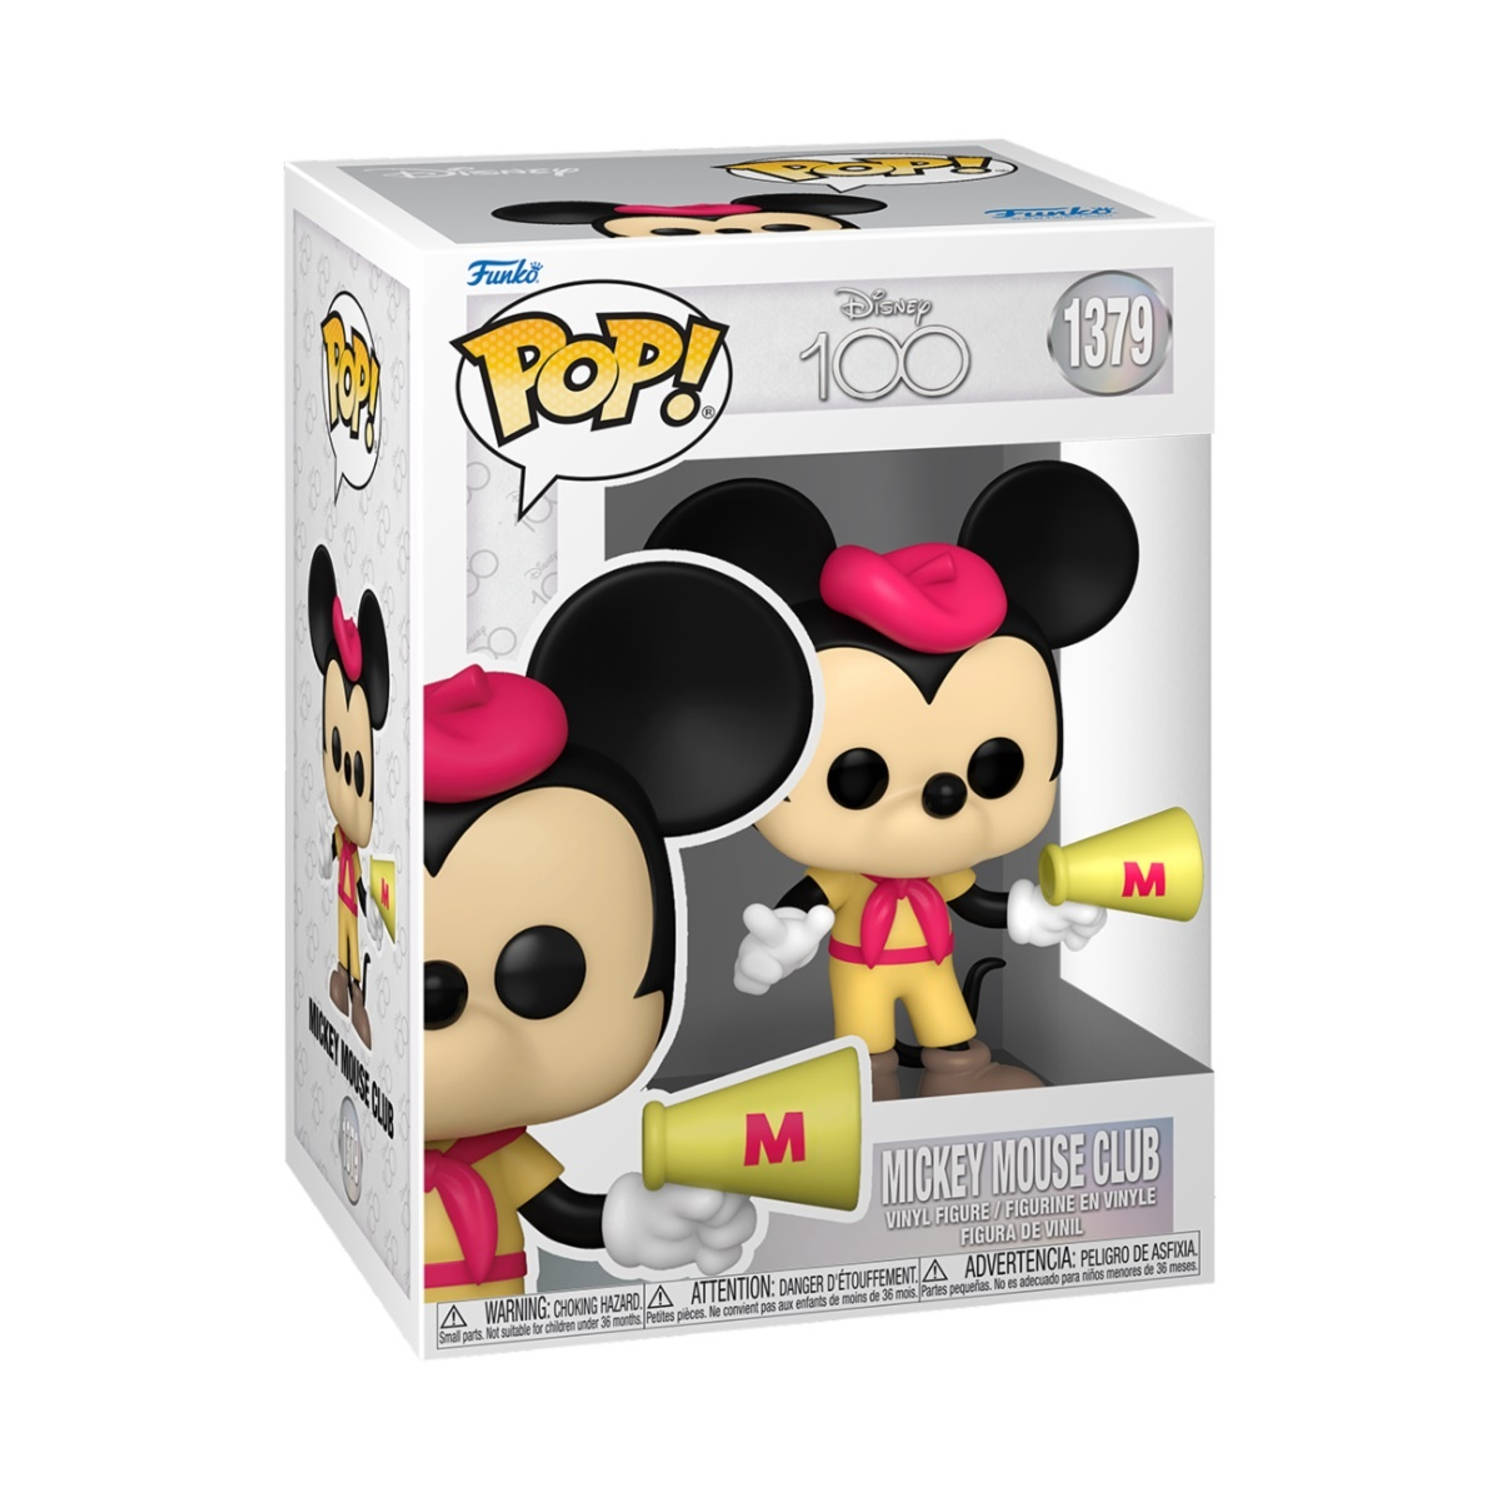 Funko Pop! Disney: Mickey Mouse Club - Mickey